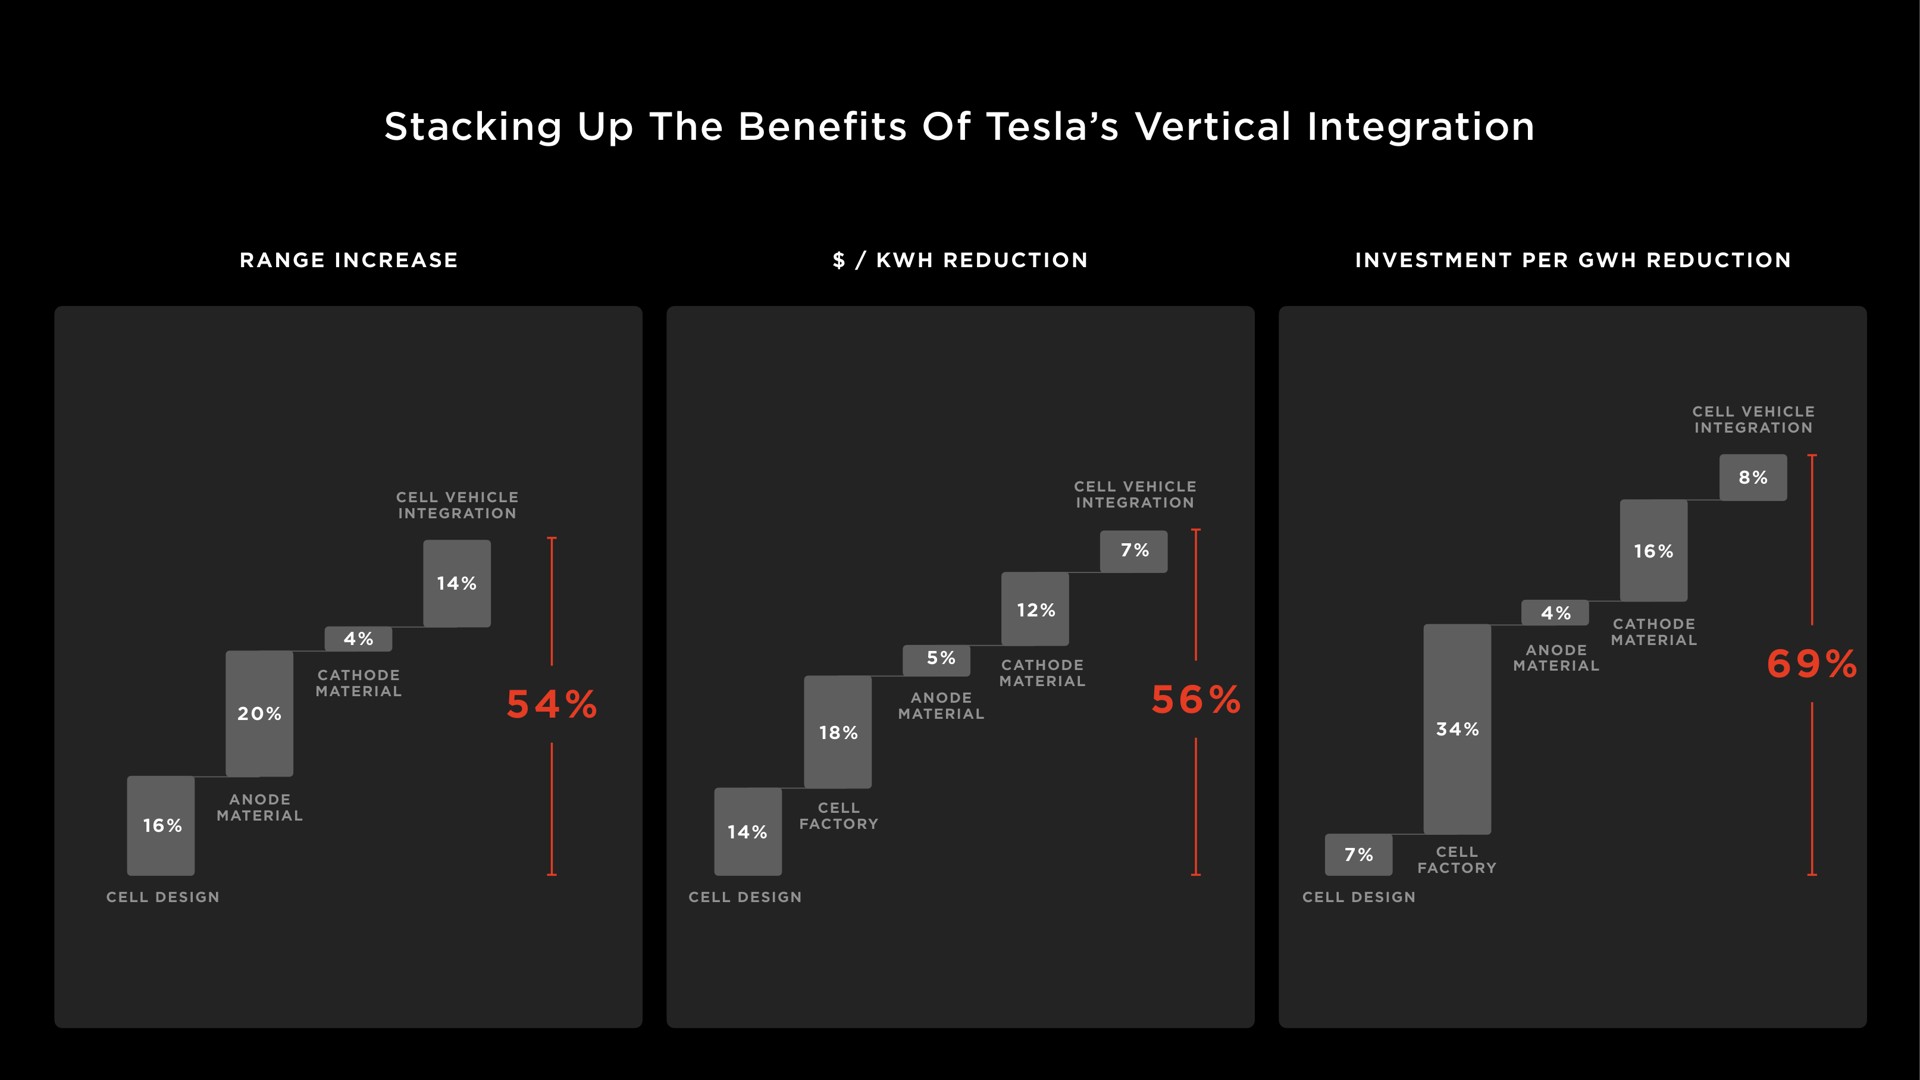 stacking up the benefits of vertical integration hob | Tesla